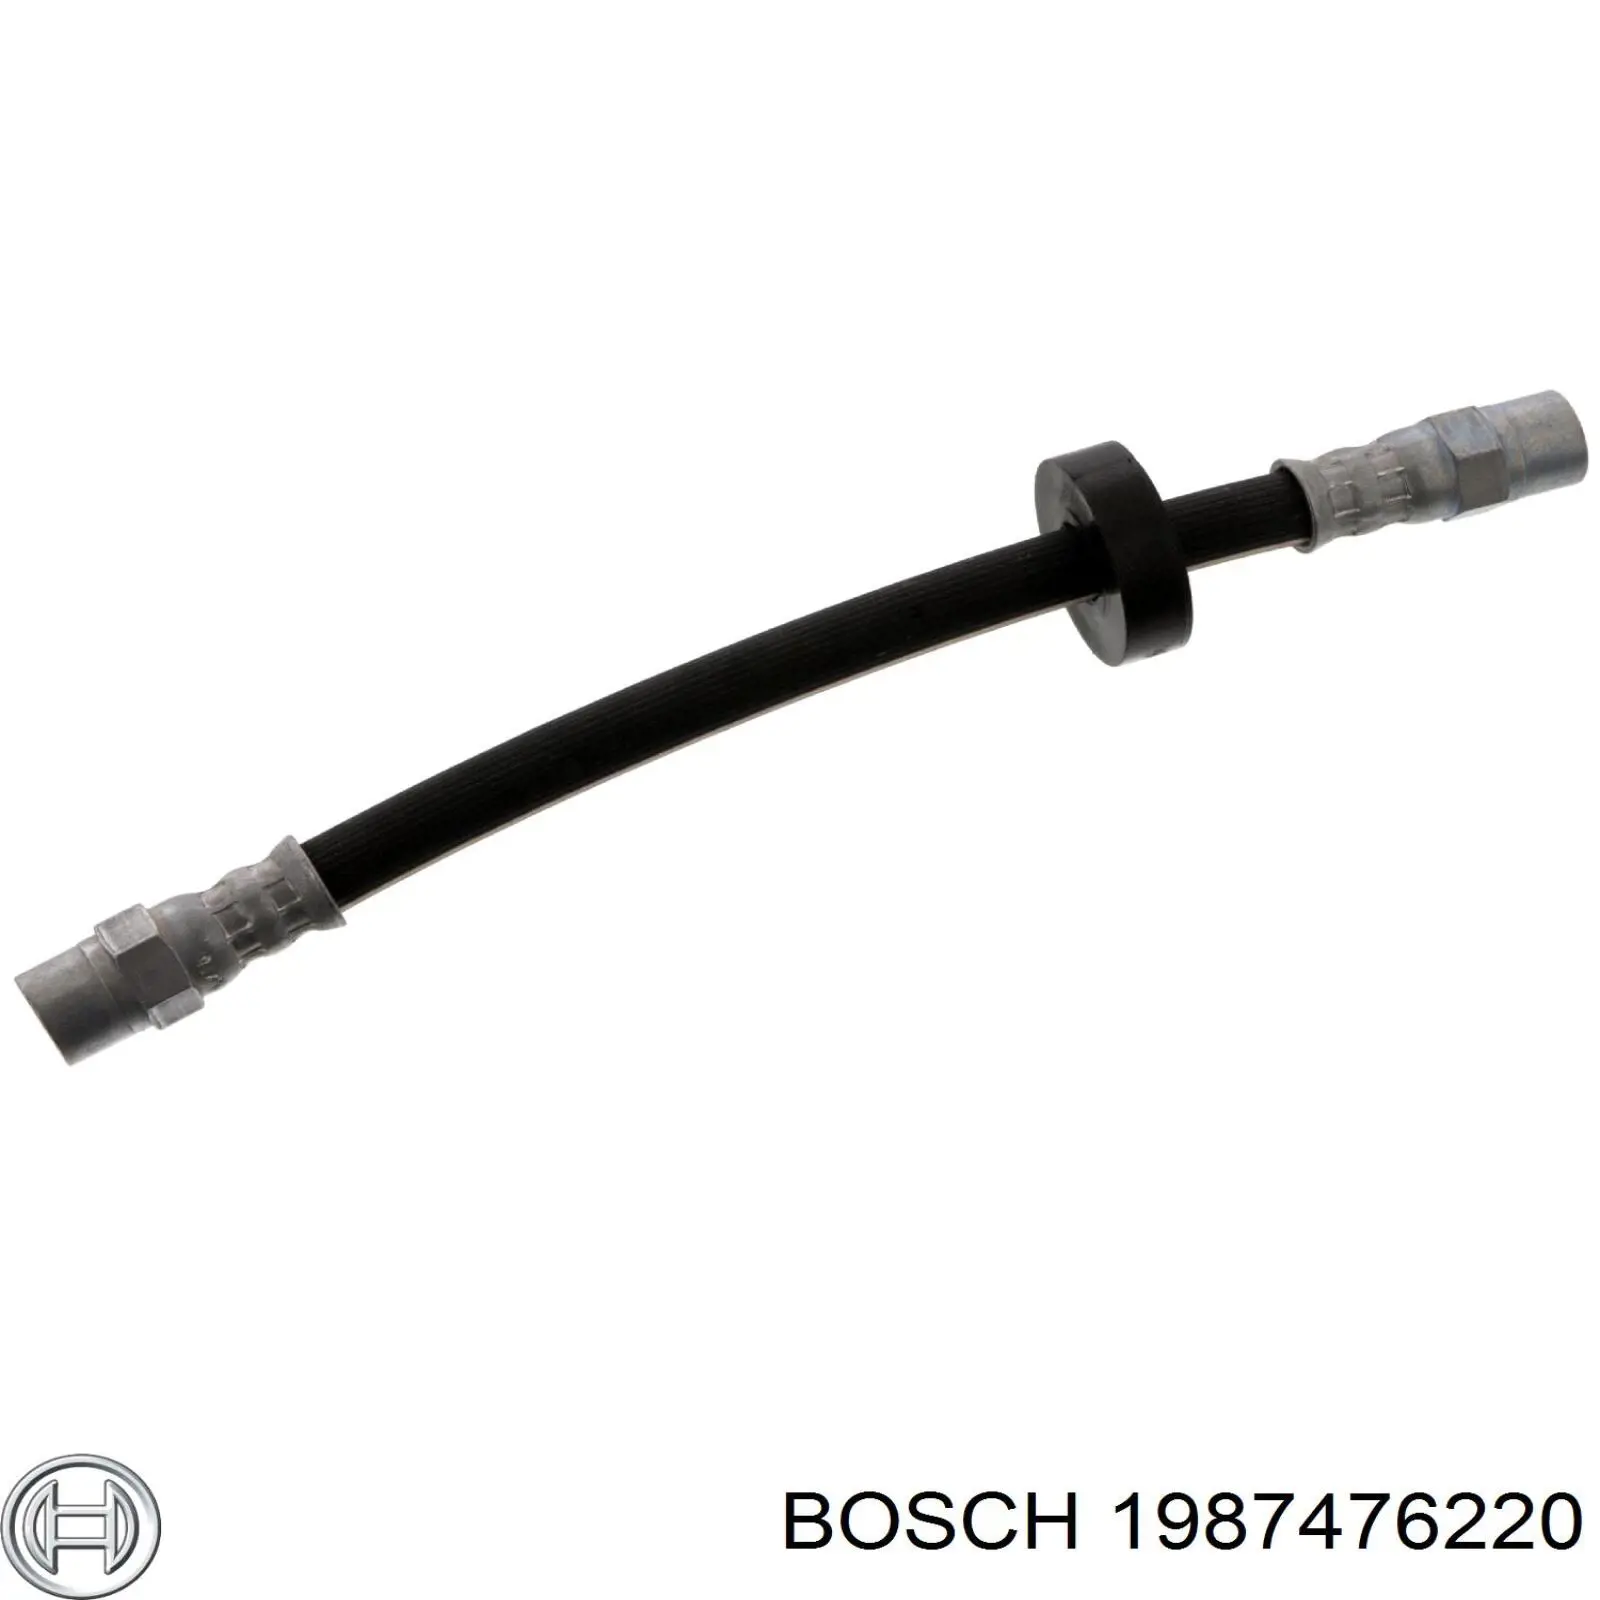 1987476220 Bosch latiguillo de freno trasero